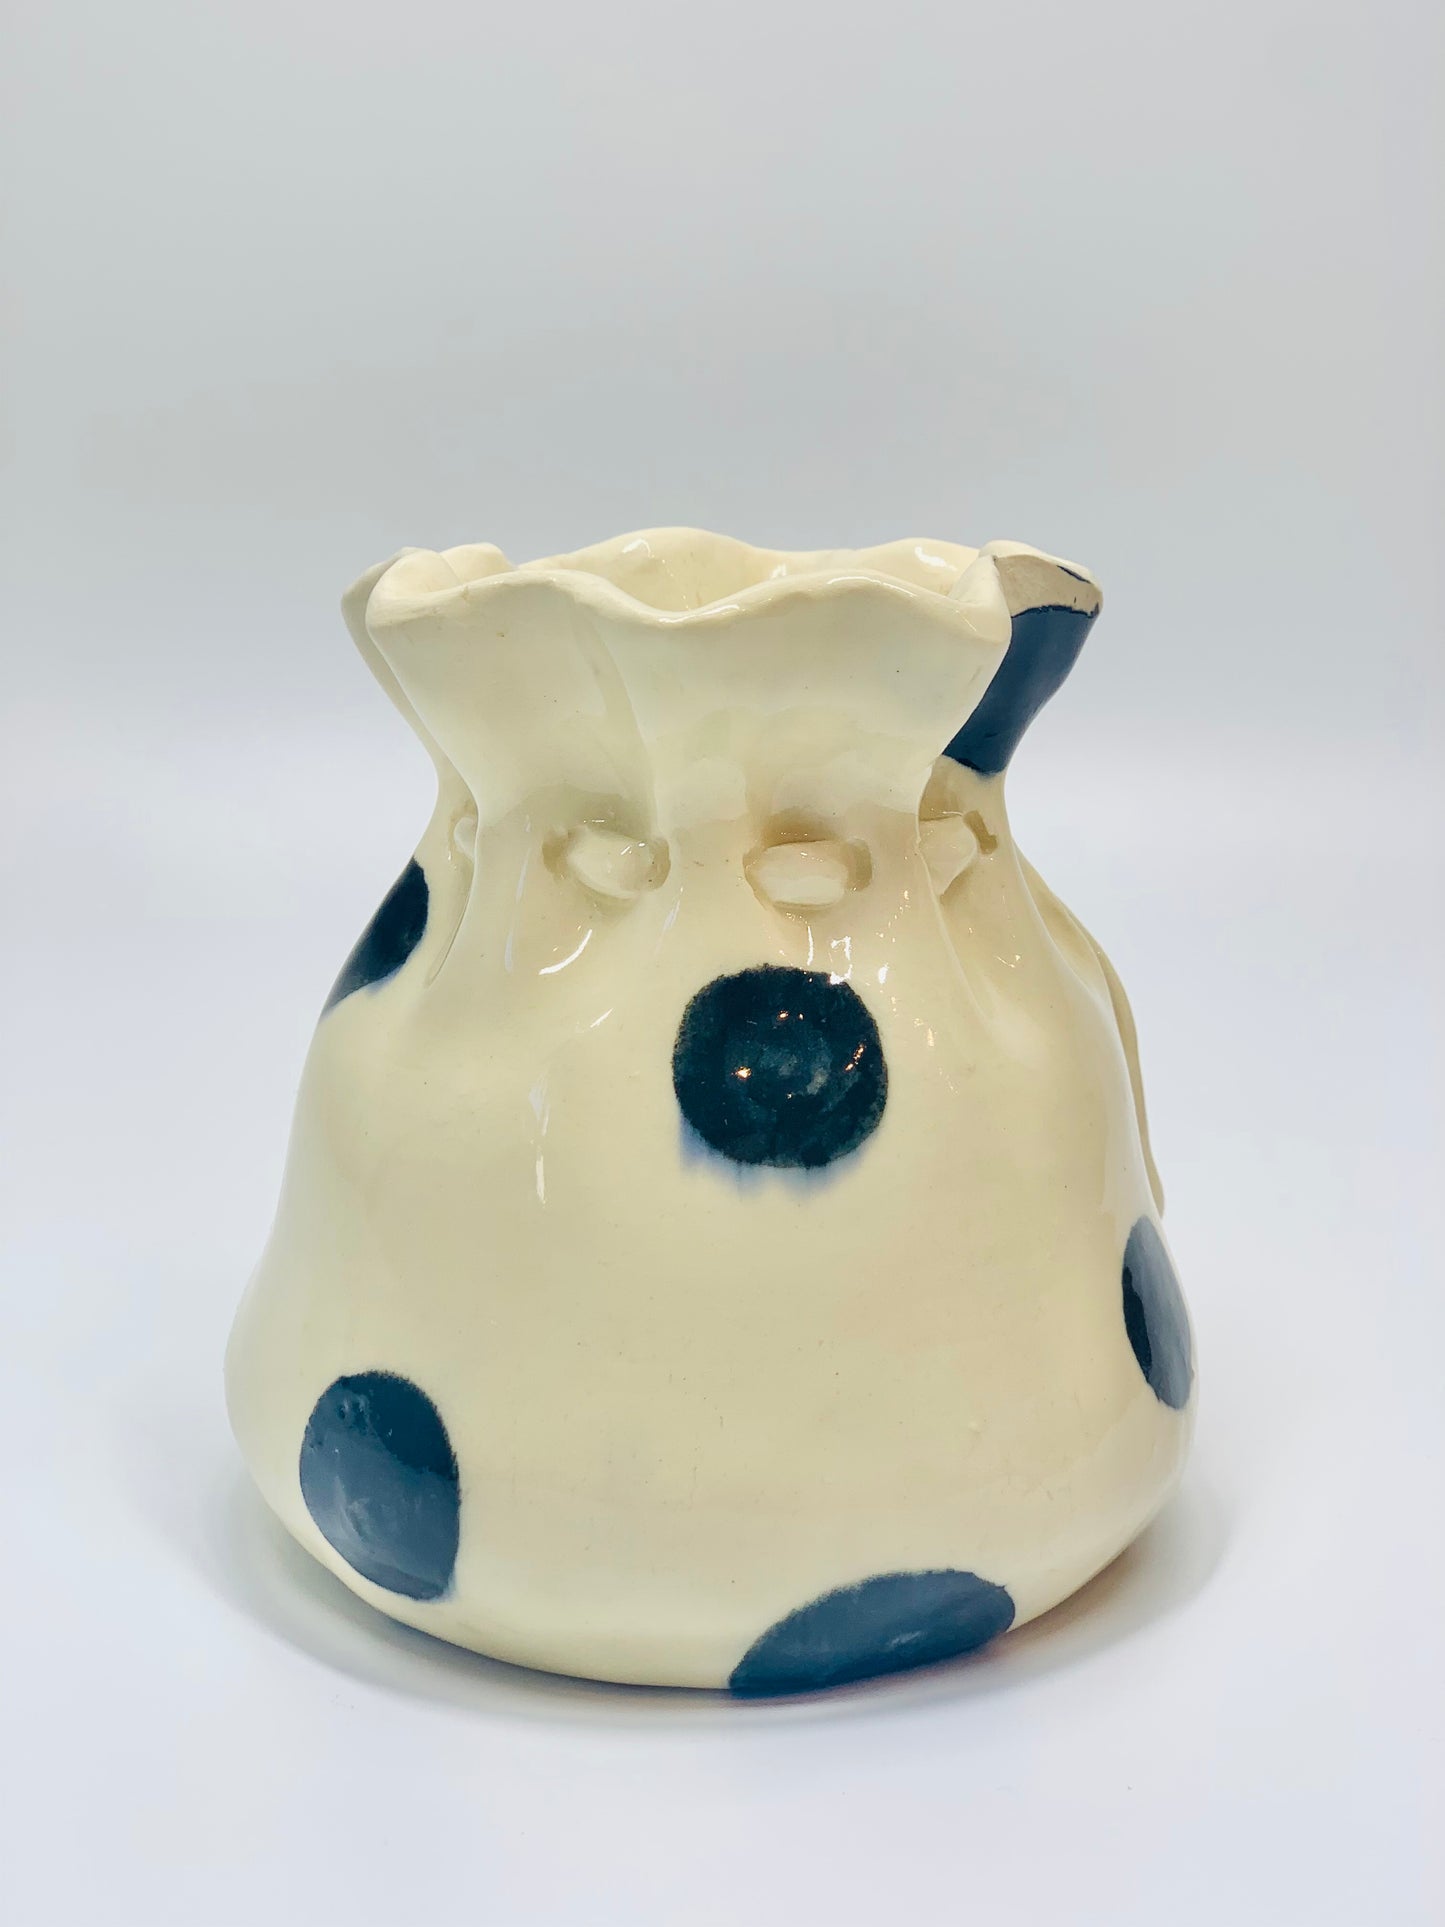 Retro hand made ceramic bag vase